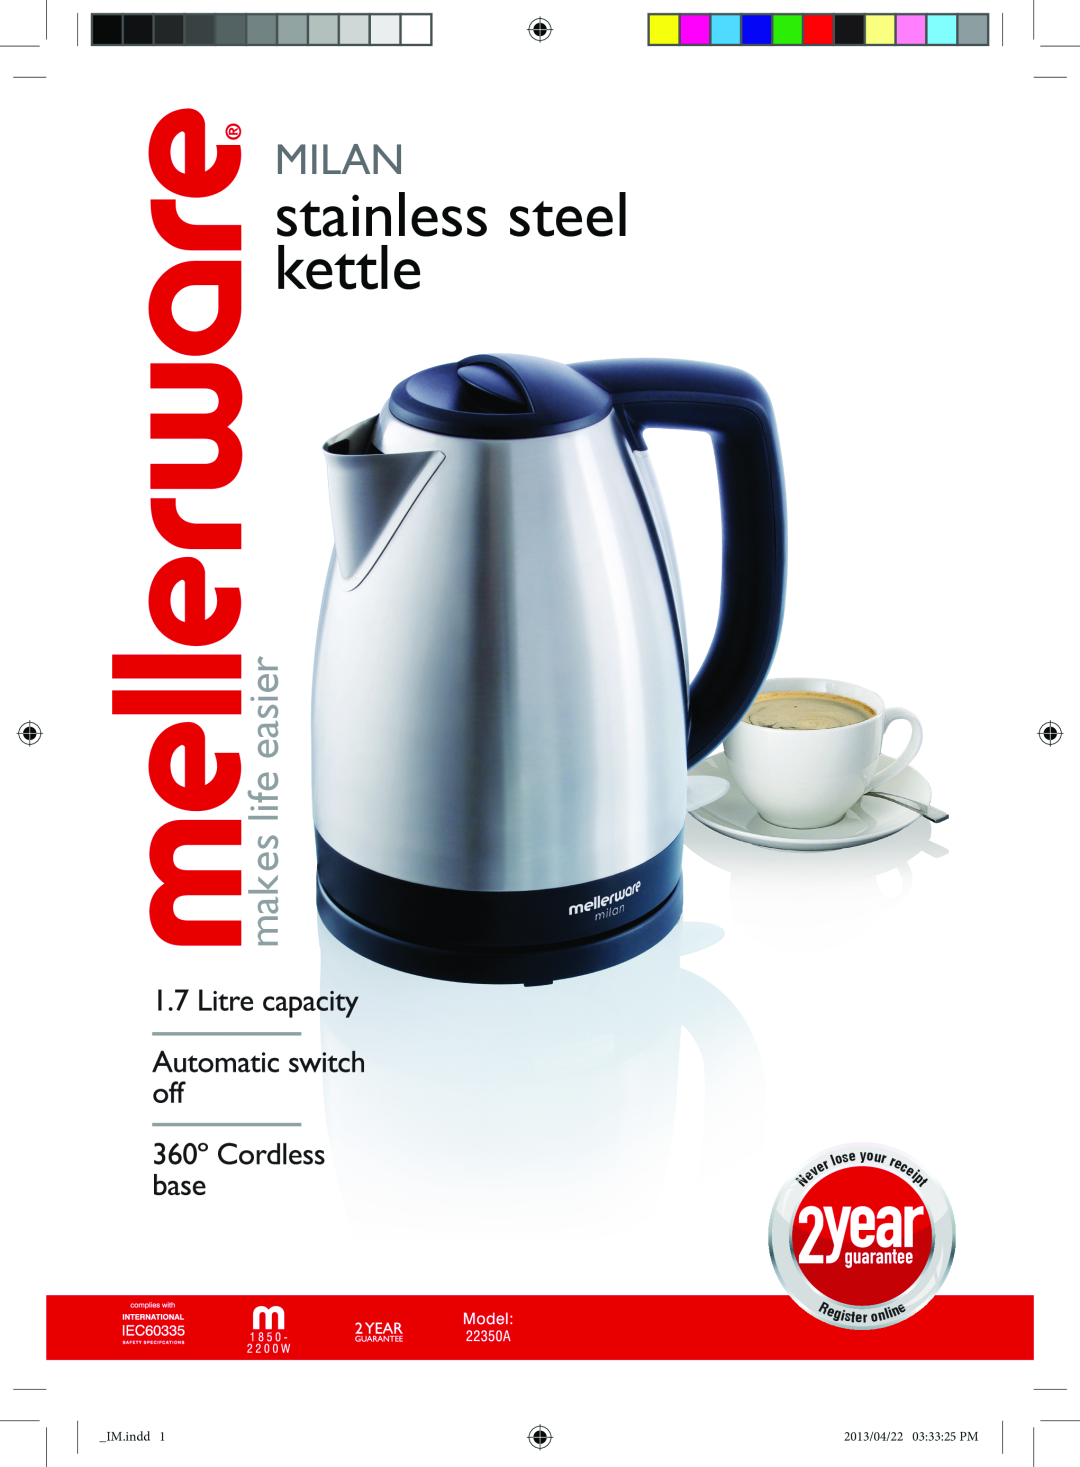 Mellerware 22350A manual stainless steel kettle, Milan, makes life easier, rec ei p t 